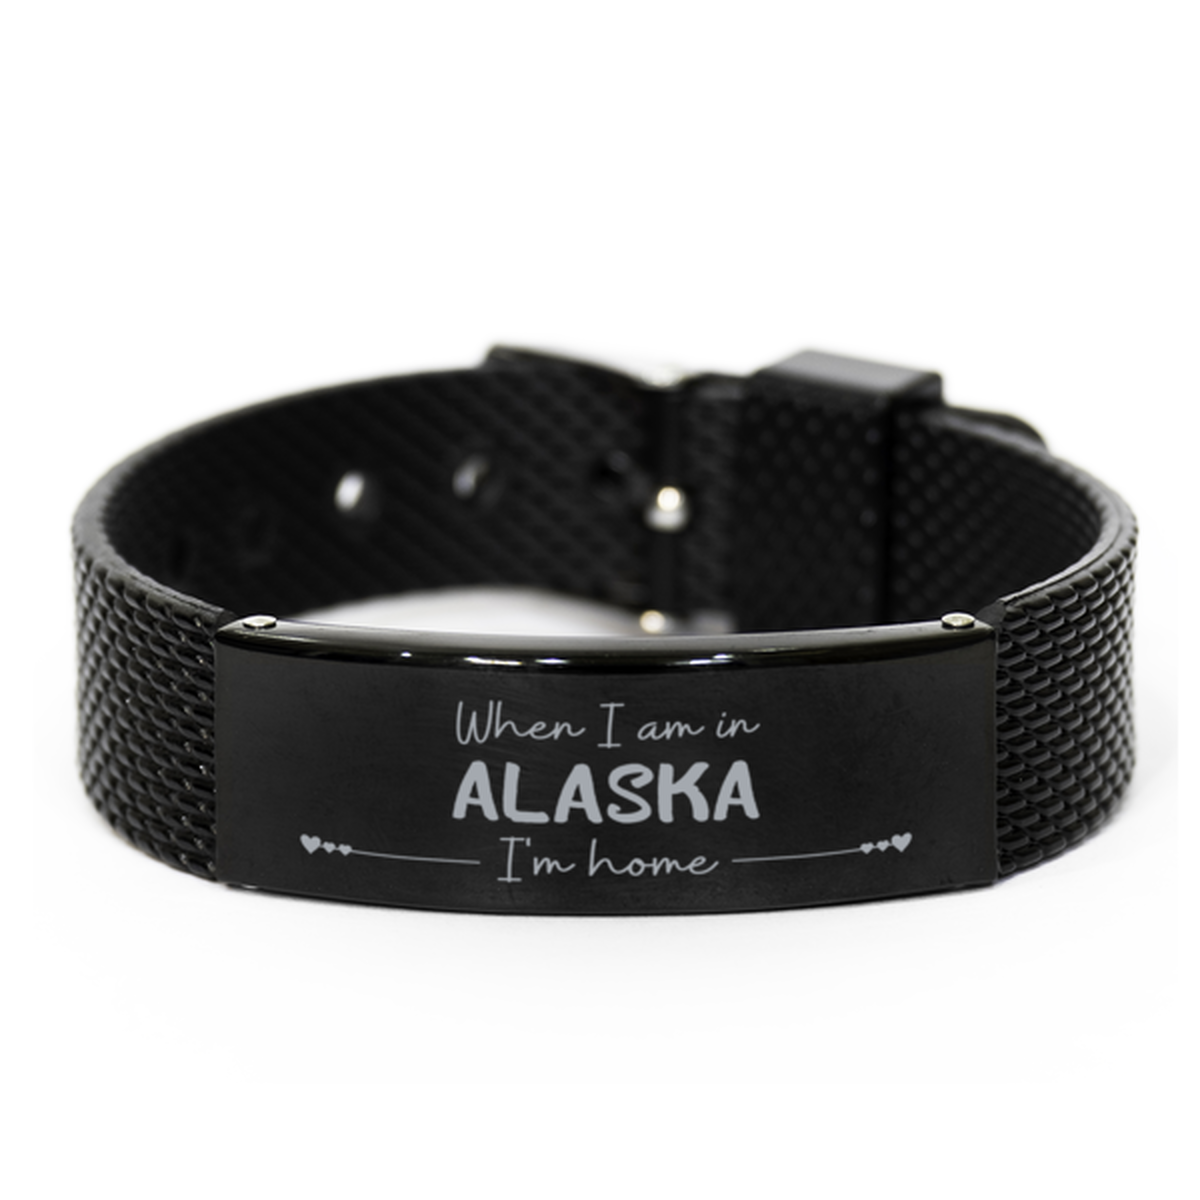 When I am in Alaska I'm home Black Shark Mesh Bracelet, Cheap Gifts For Alaska, State Alaska Birthday Gifts for Friends Coworker